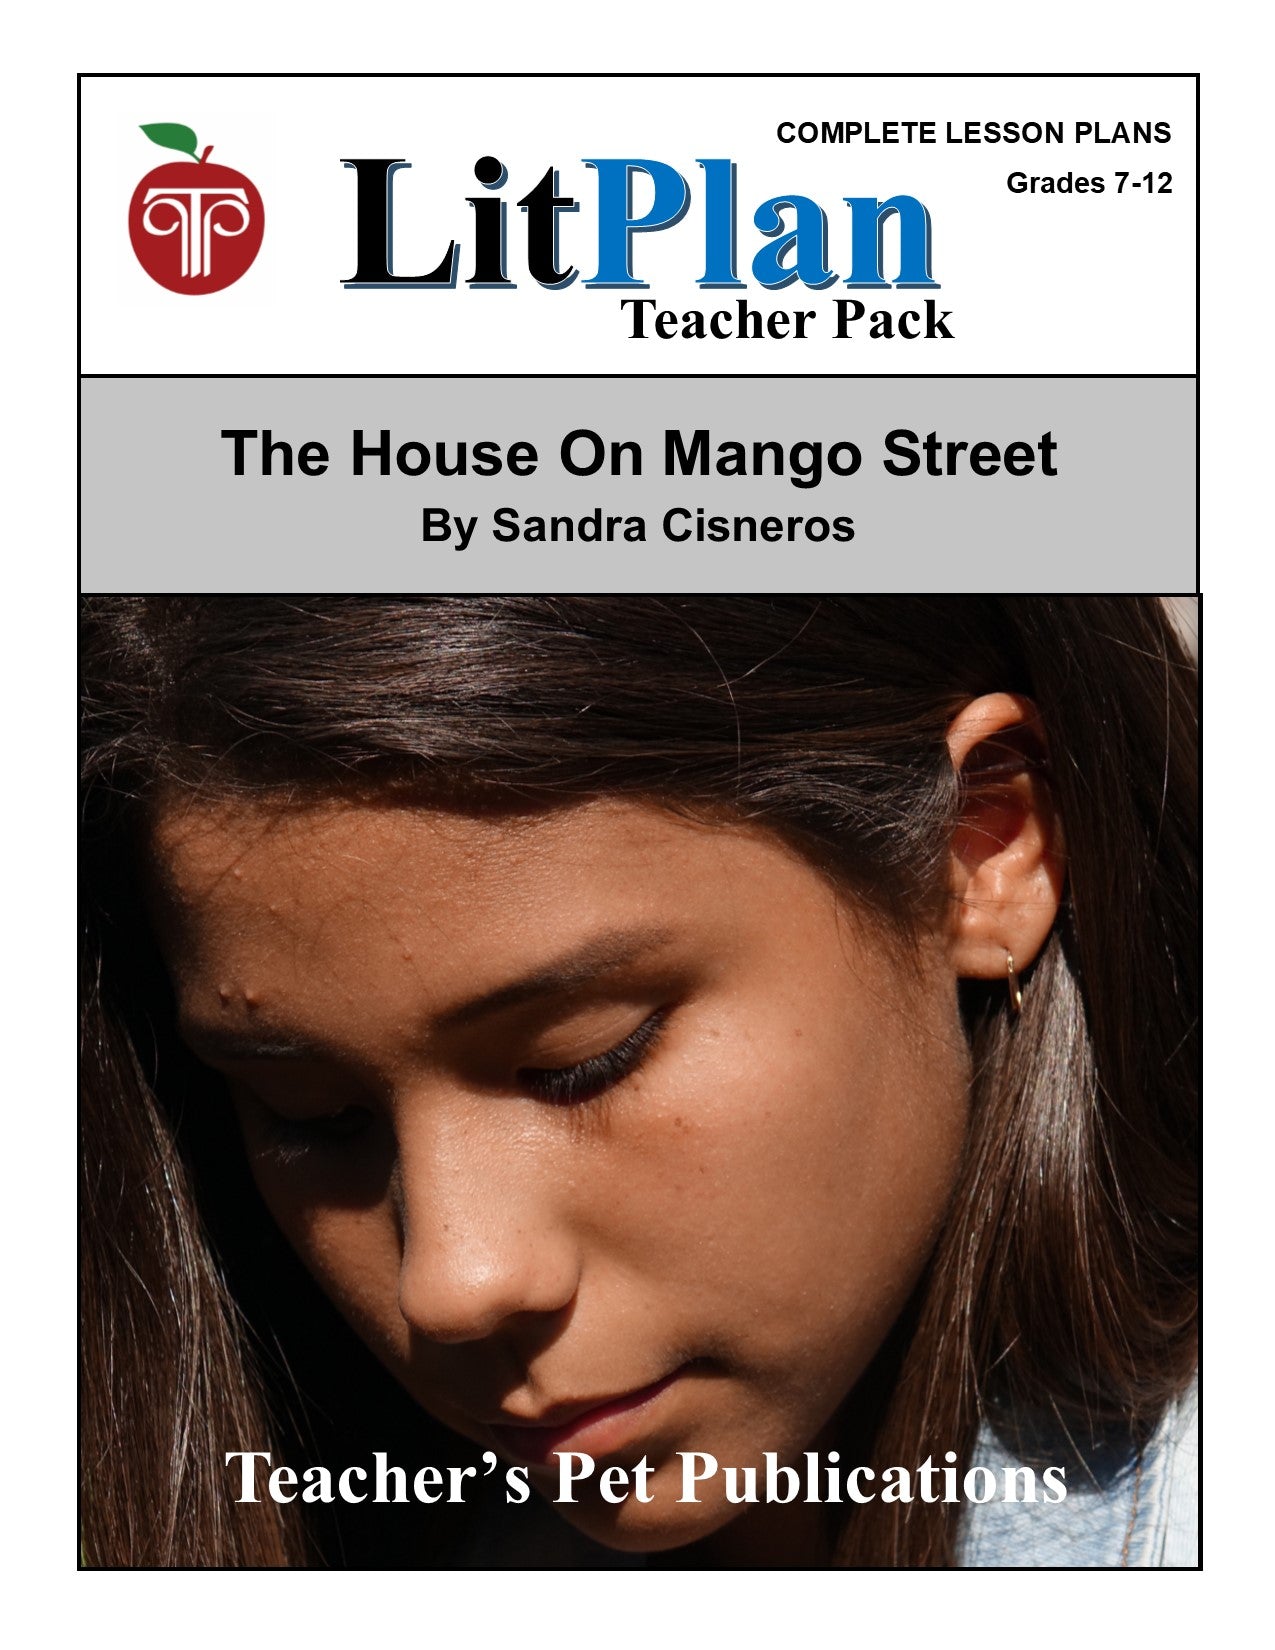 The House on Mango Street: LitPlan Teacher Pack Grades 7-12